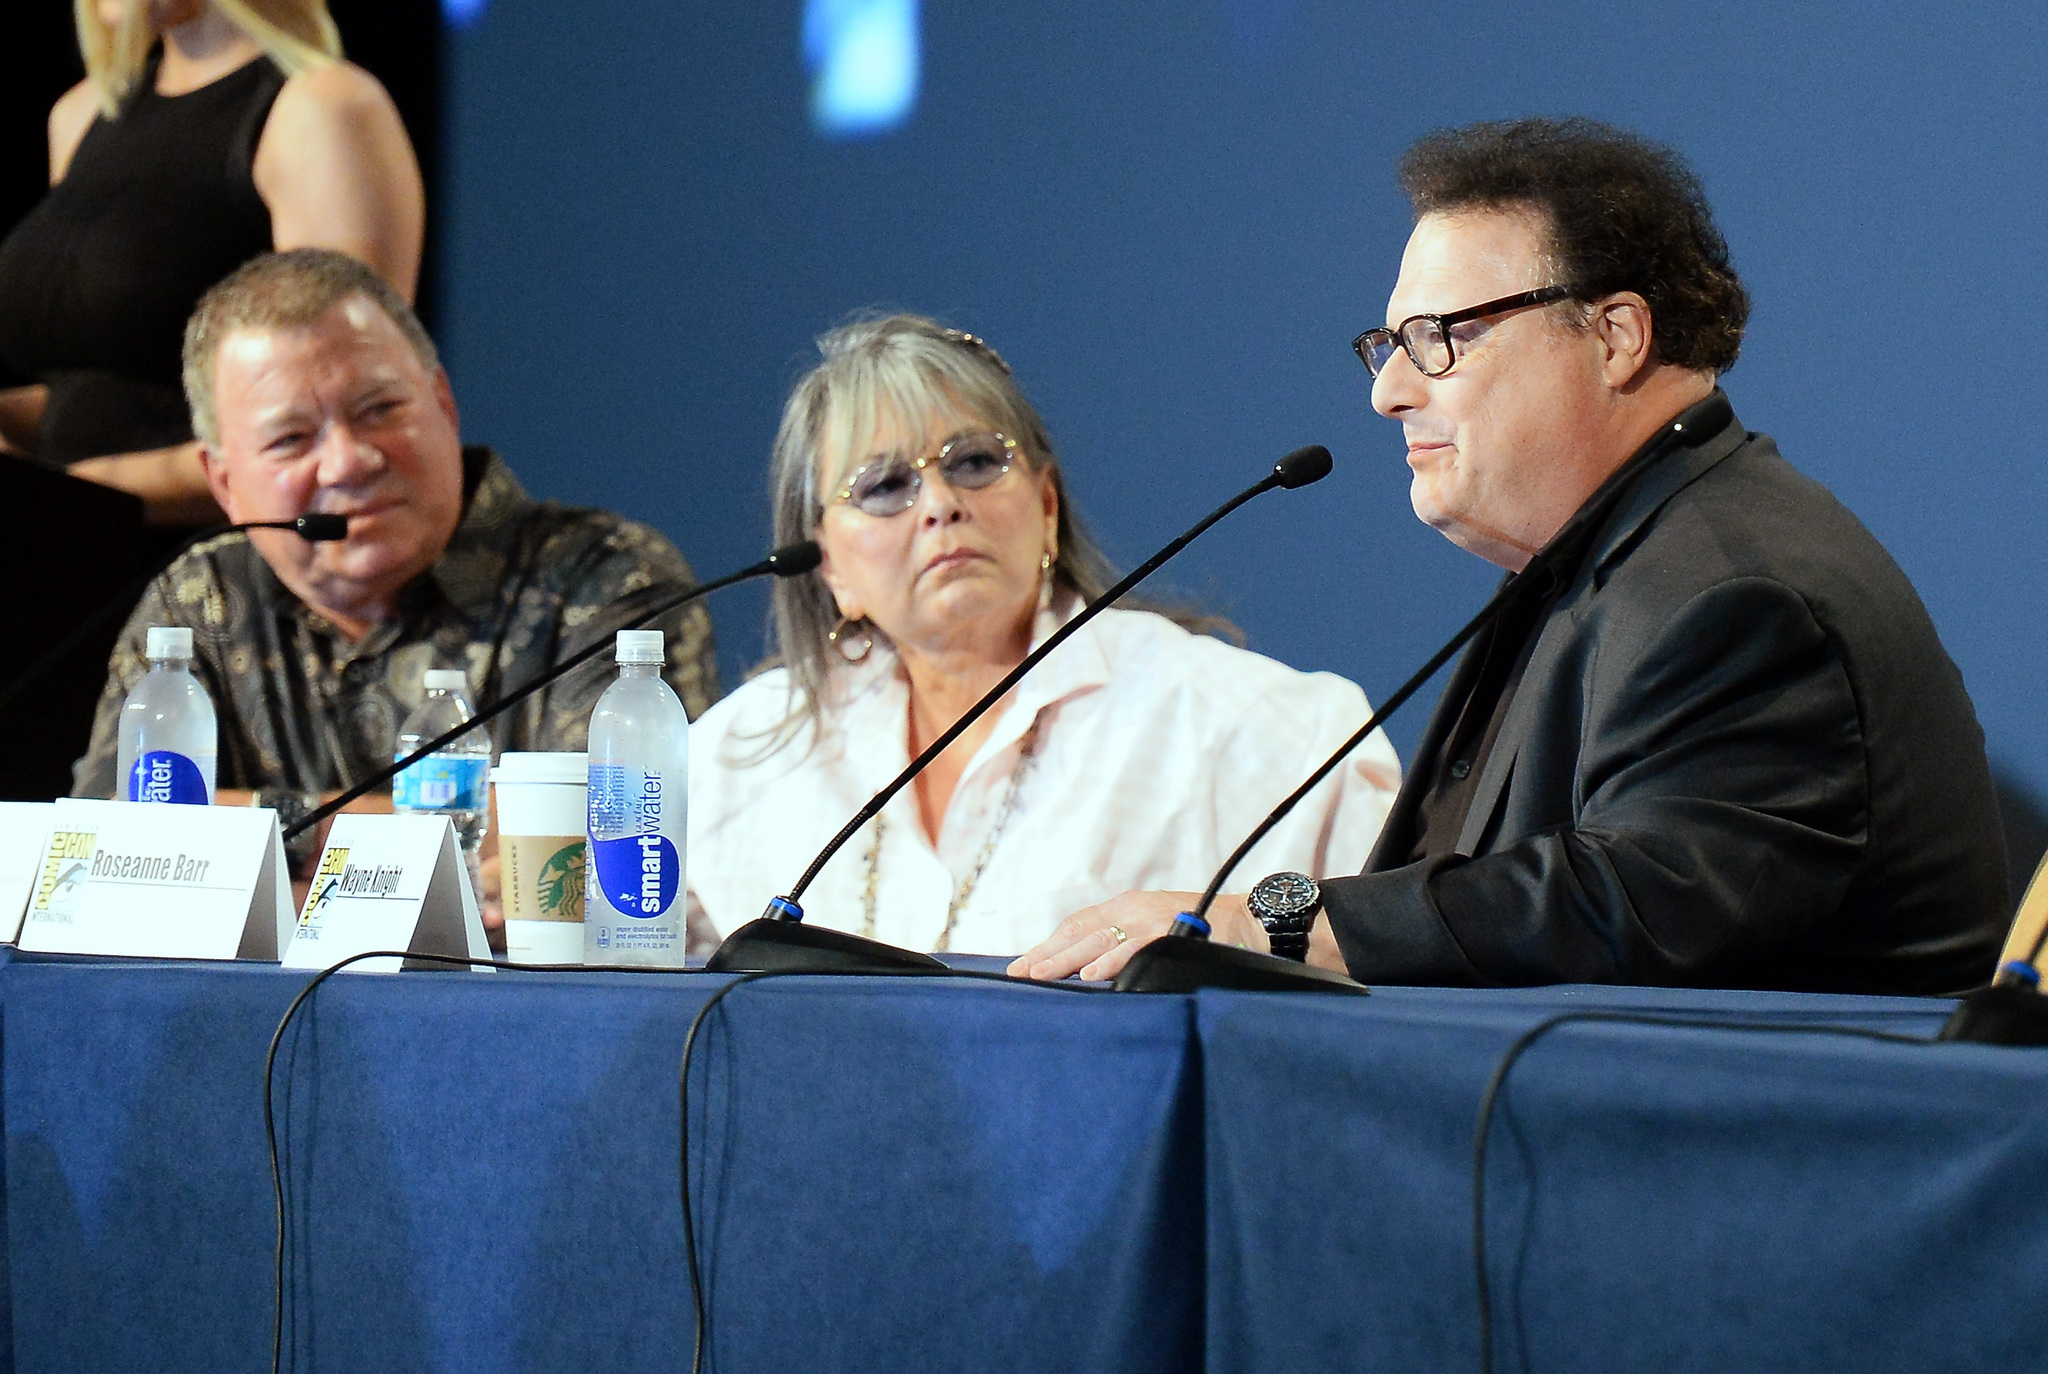 William Shatner, Wayne Knight and Roseanne Barr